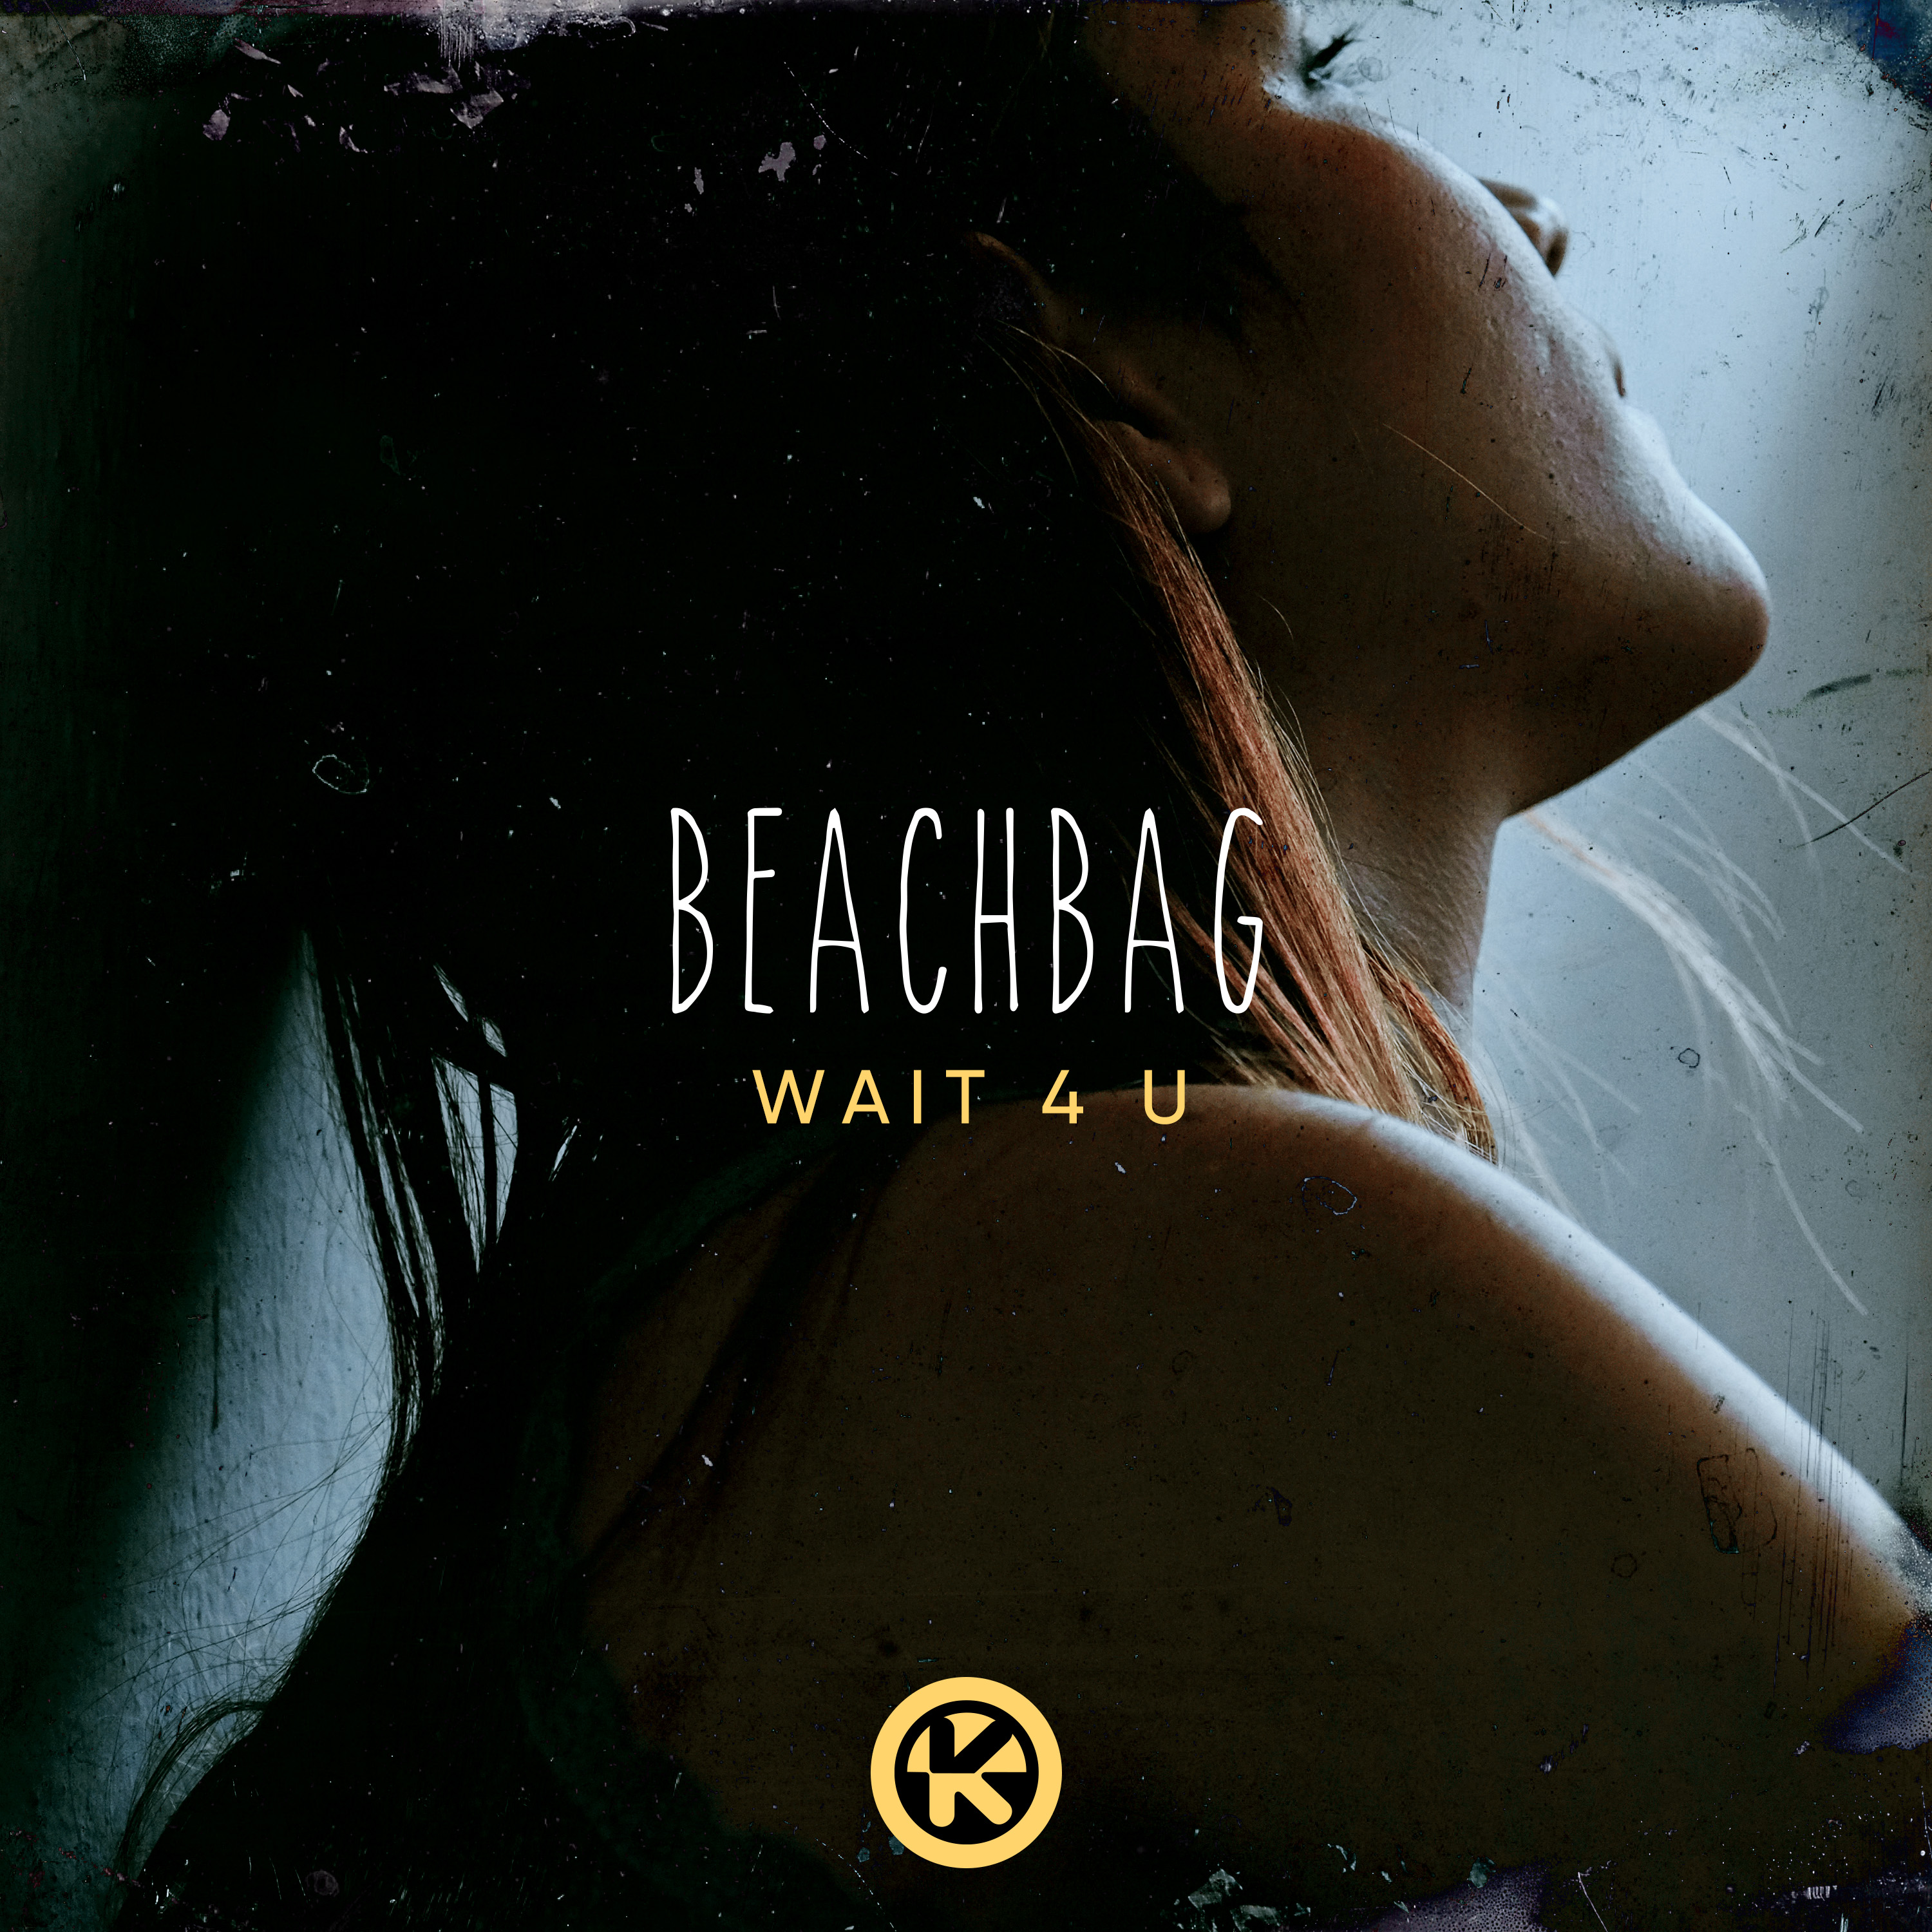 Beachbag Wait 4 U